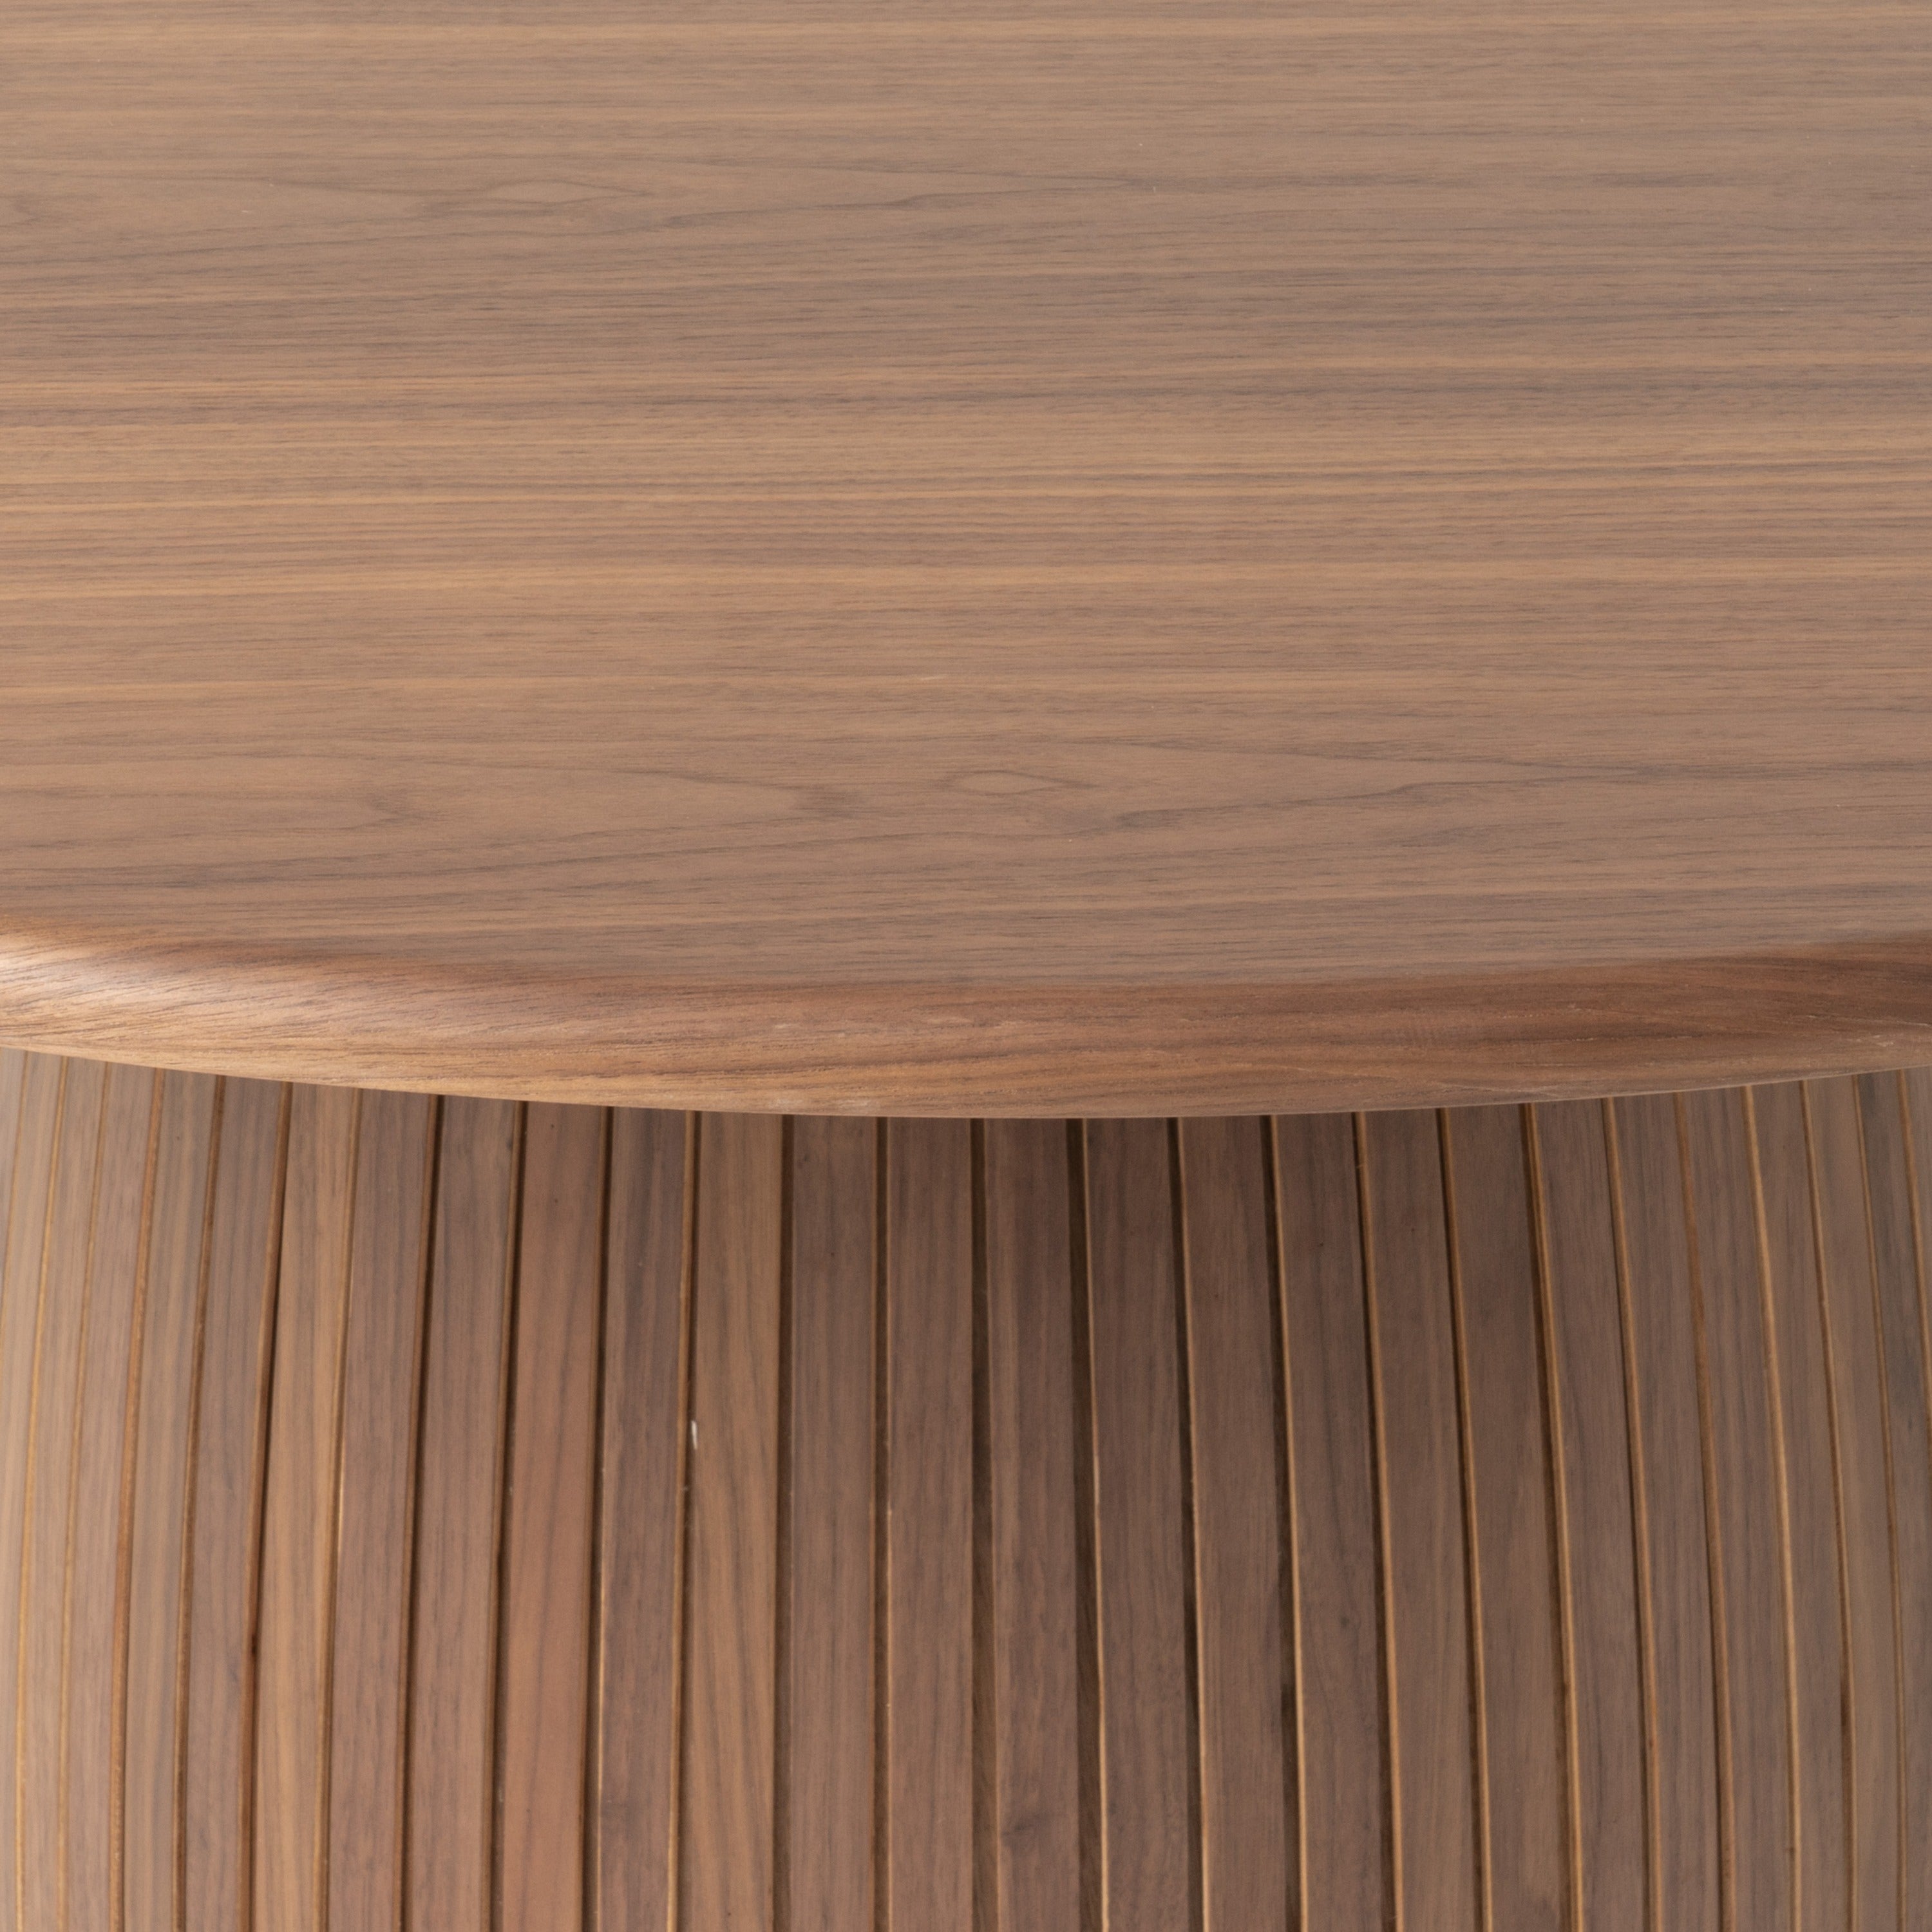 Modrest Sheridan - Mid-Century Modern Walnut Round Dining Table